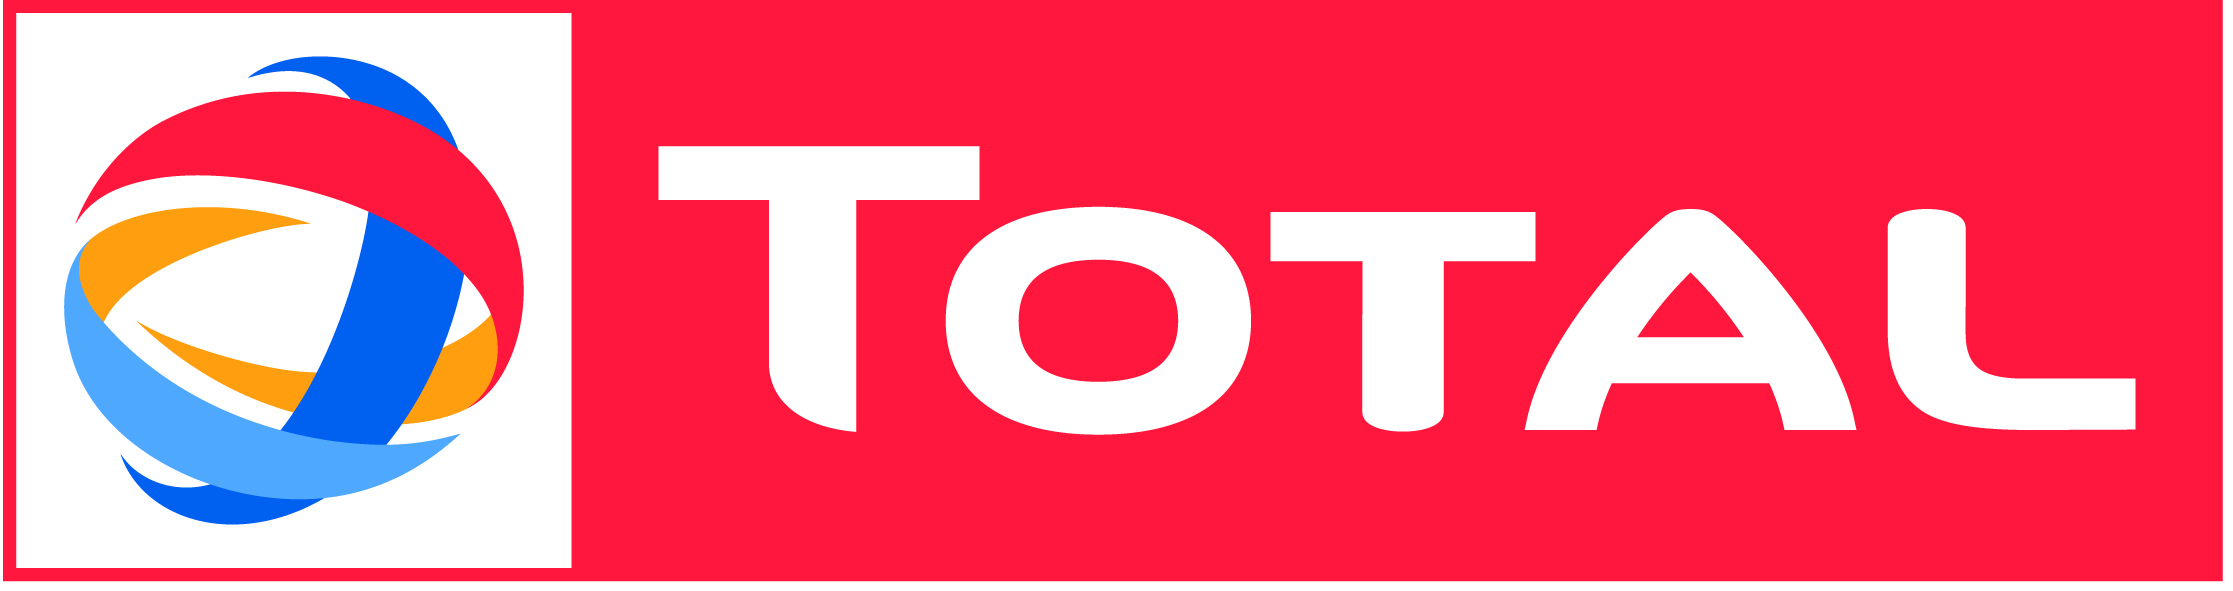 Total company. Total масло logo. Моторное масло тотал логотип. Логотип Тоталь. Бренды моторных масел логотипы.